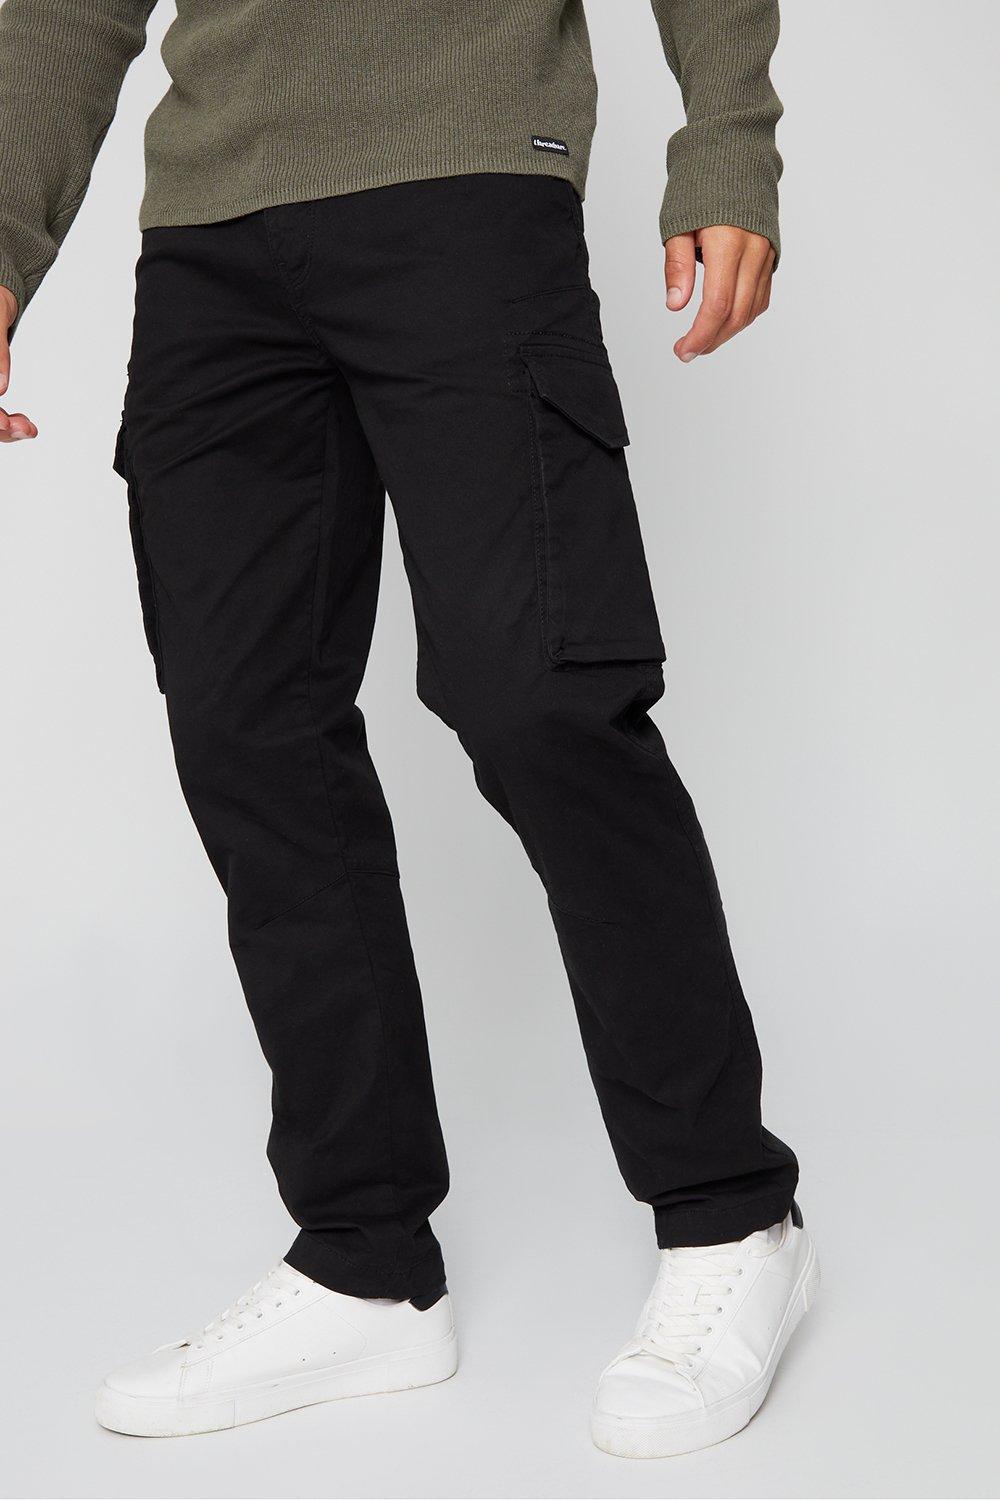 BadRhino Black Single Pleat Smart Trousers